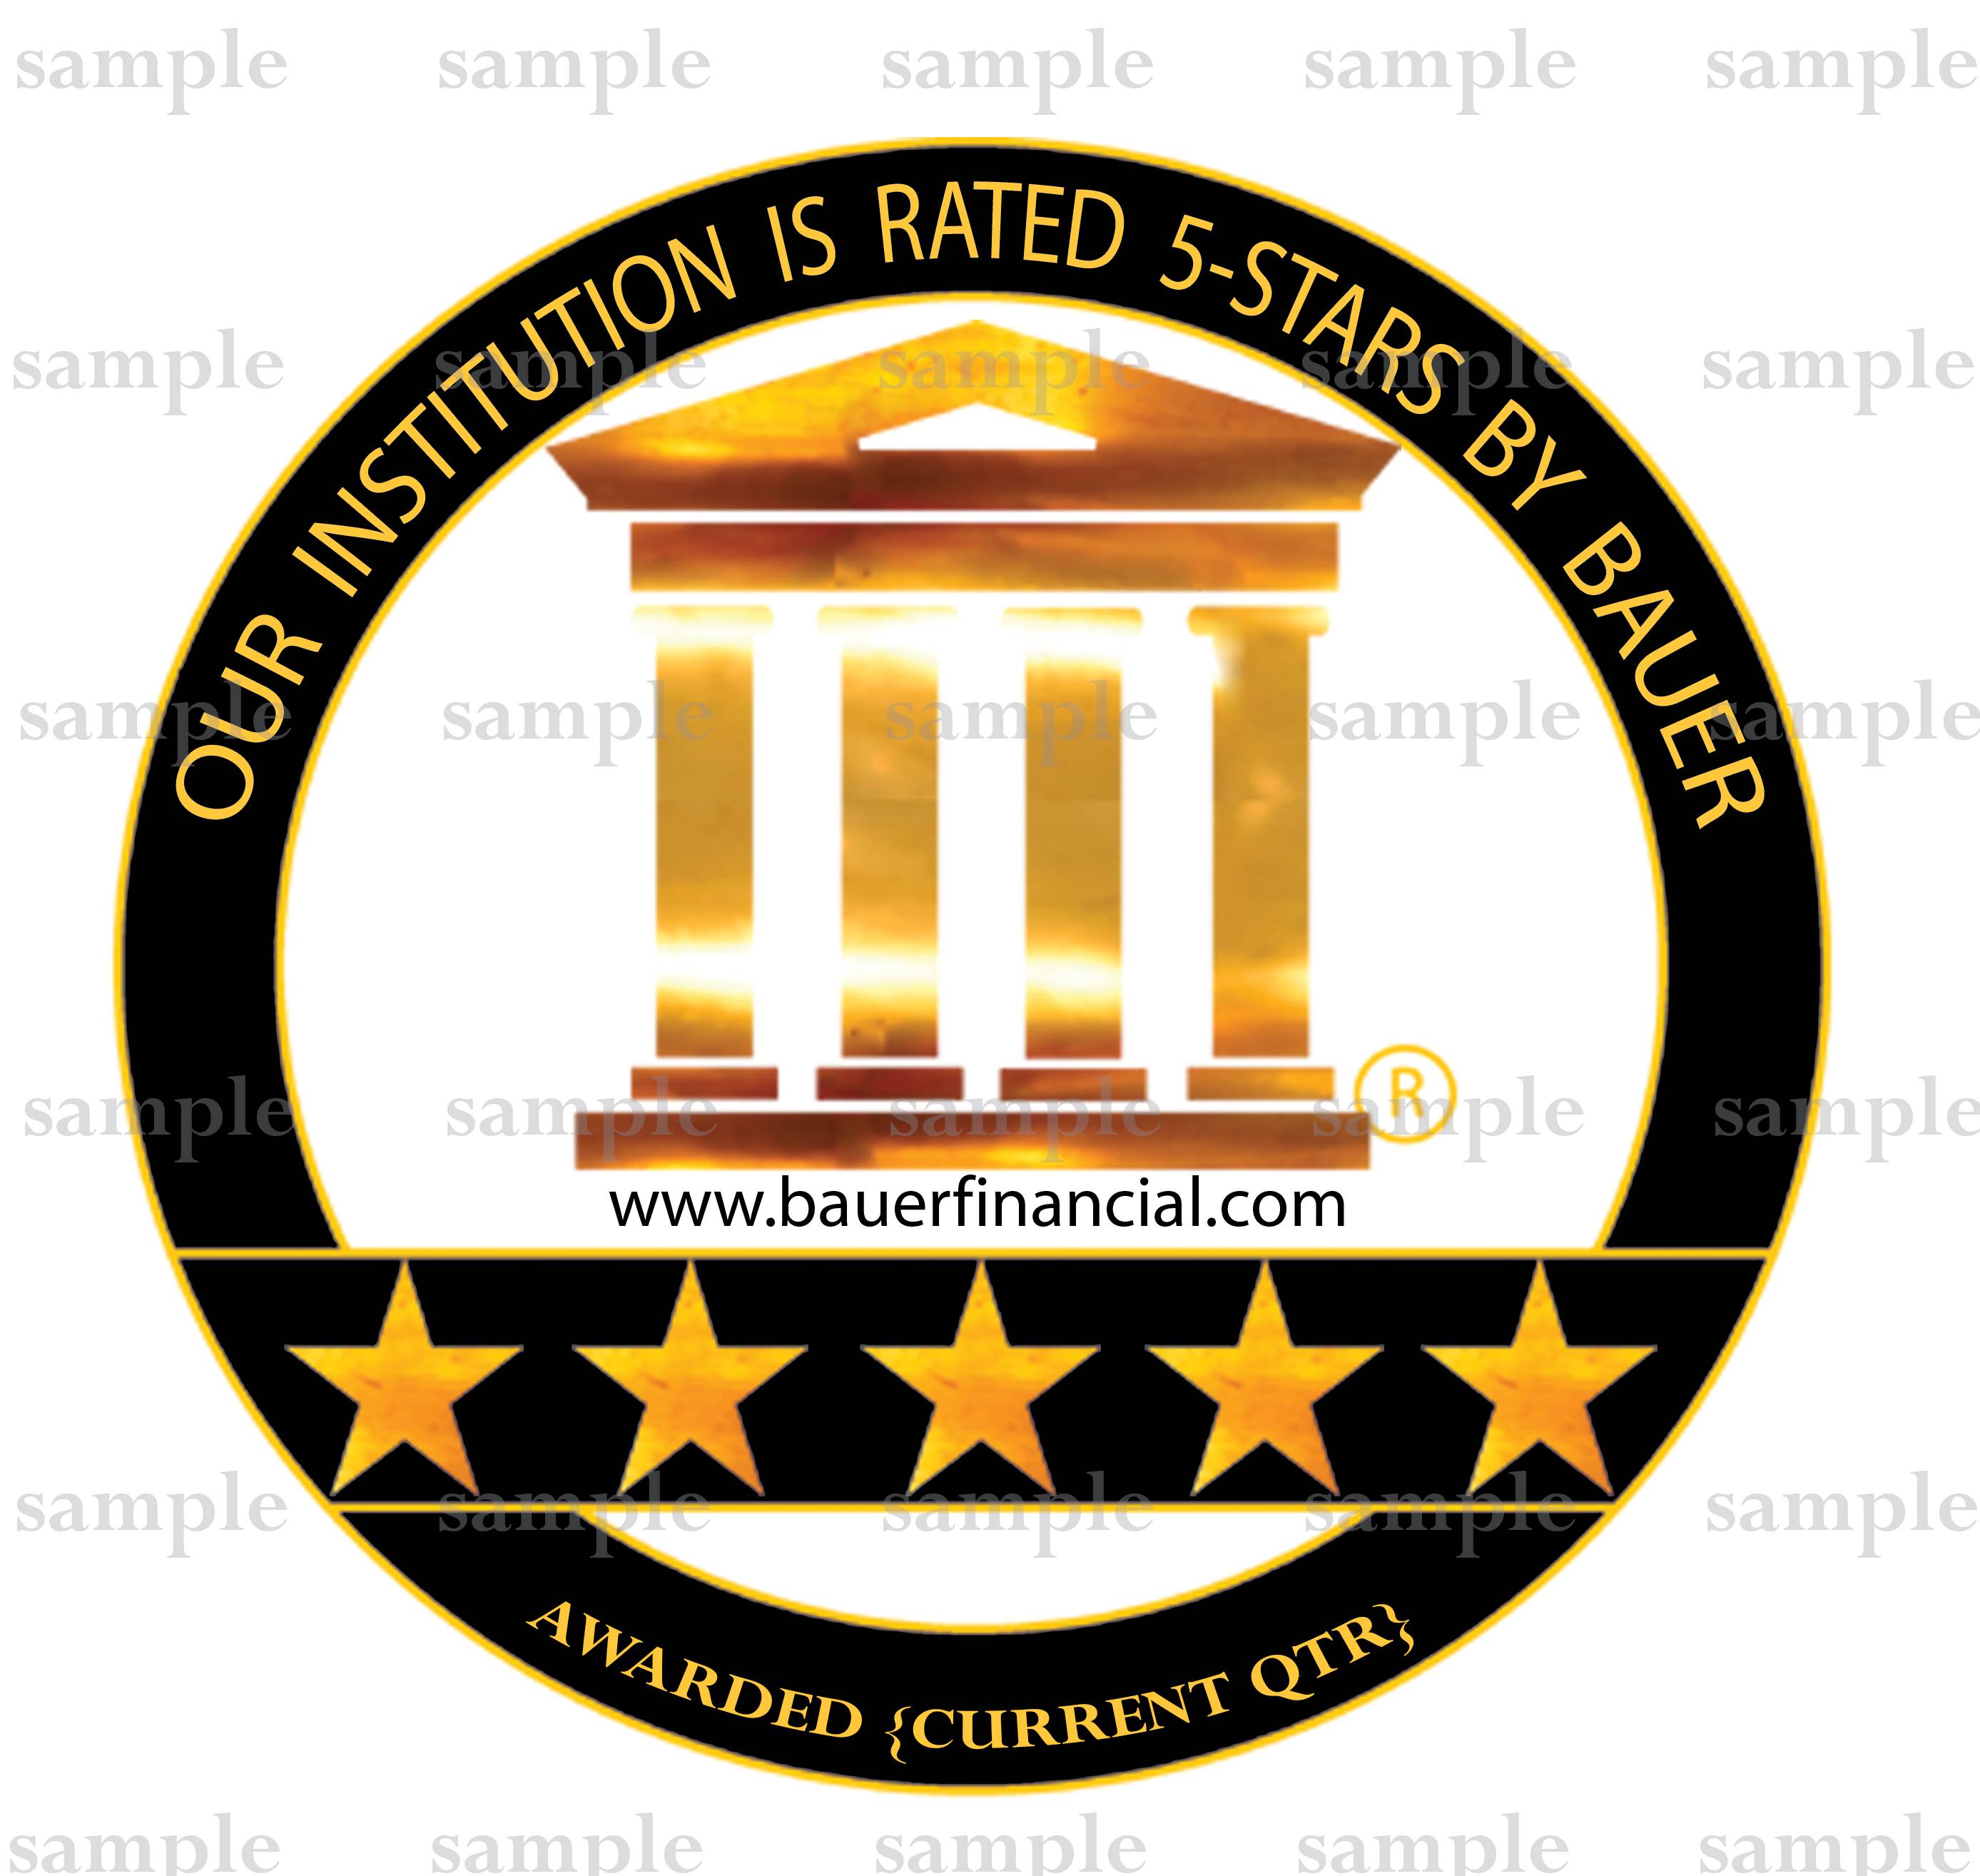 Generic Sample Logo - High Resolution / Personalized 5-Star Logo – BauerFinancial